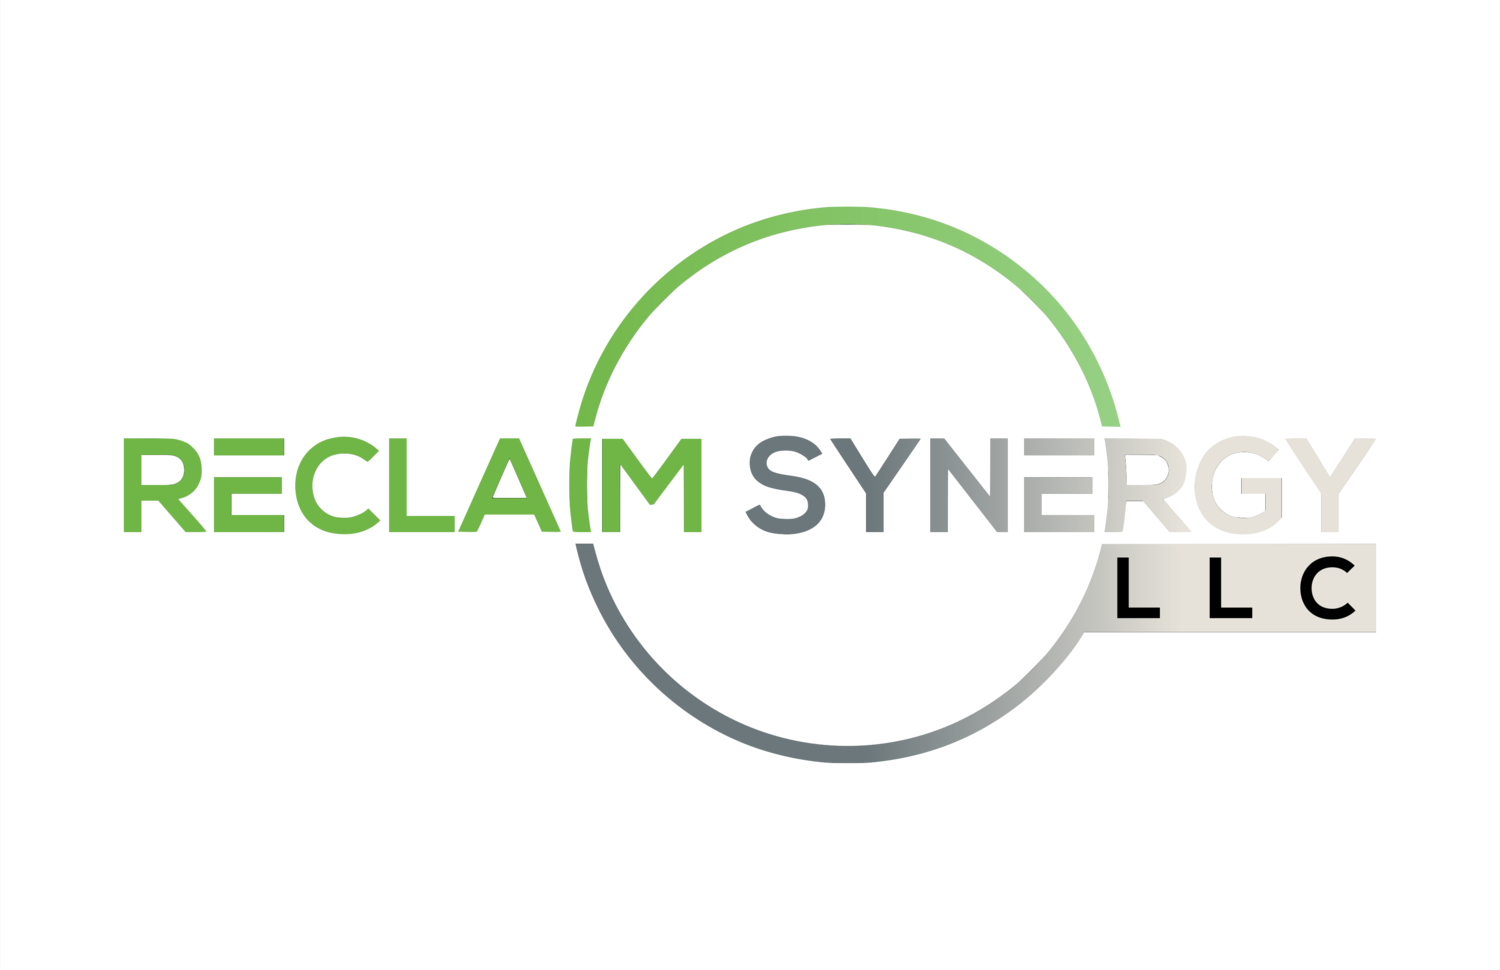 Reclaim Synergy, LLC